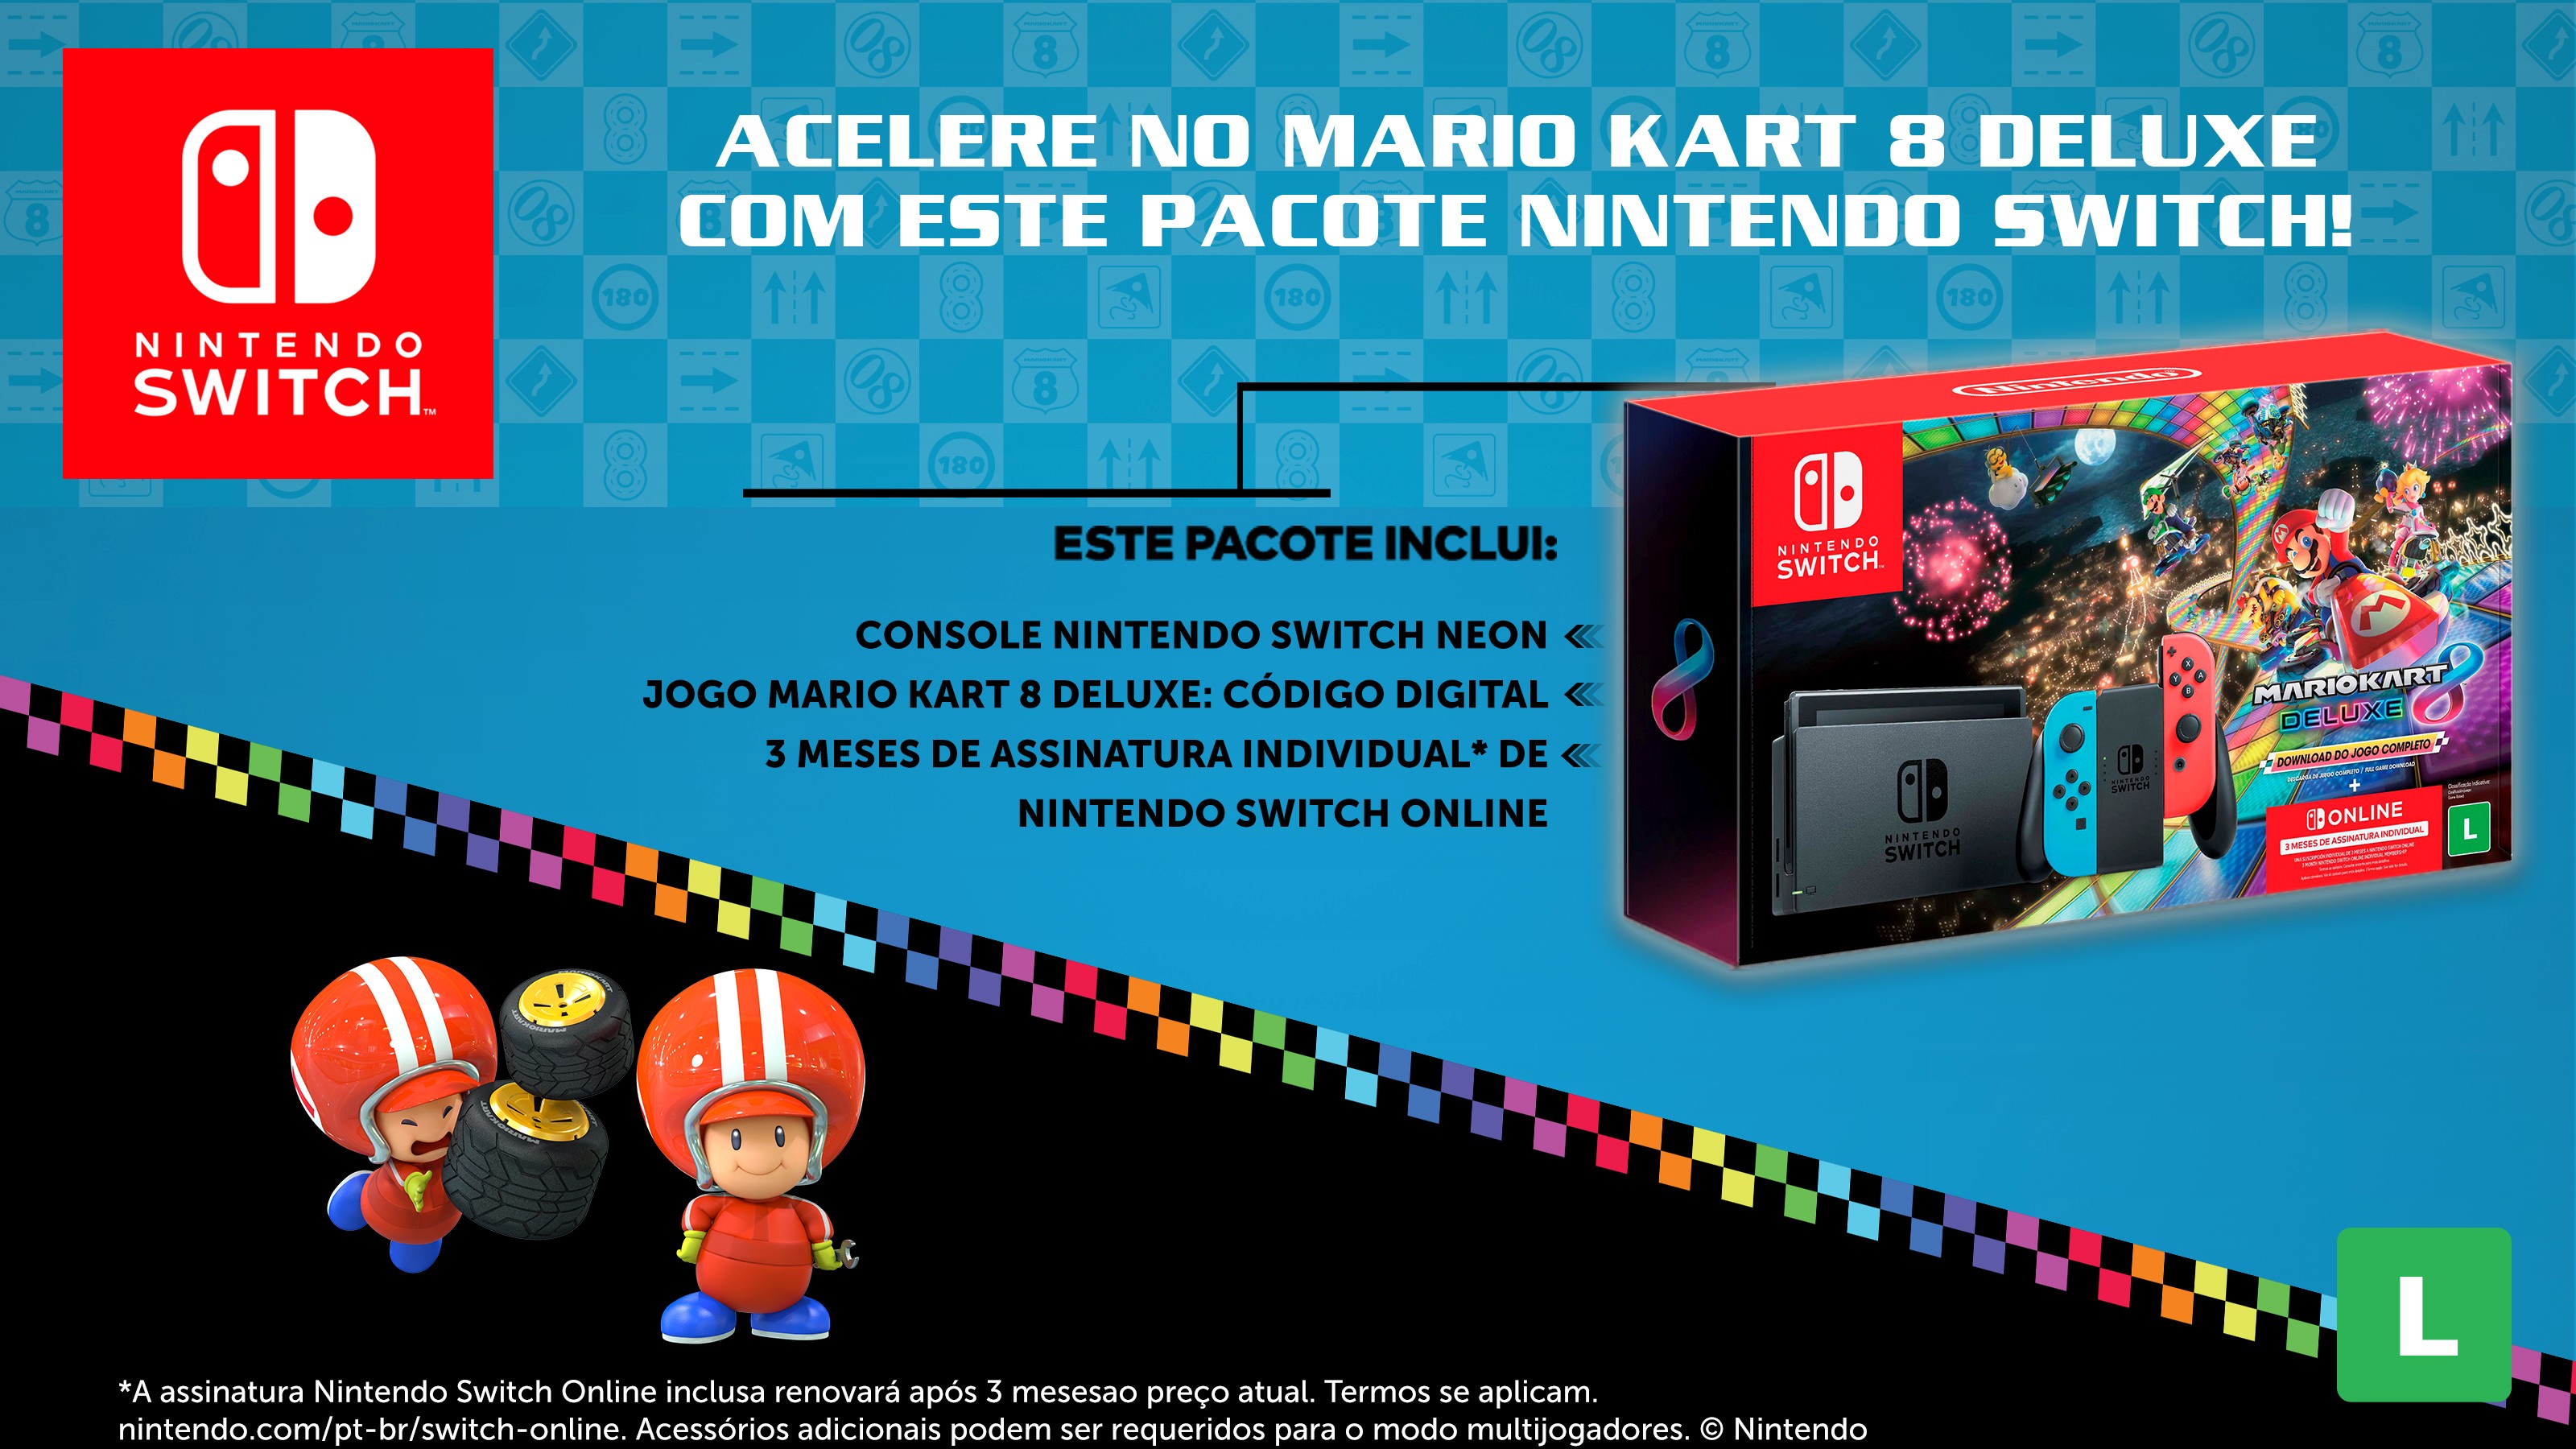 Mario Kart 8 Deluxe - Jogo Nintendo Switch - Seminovo